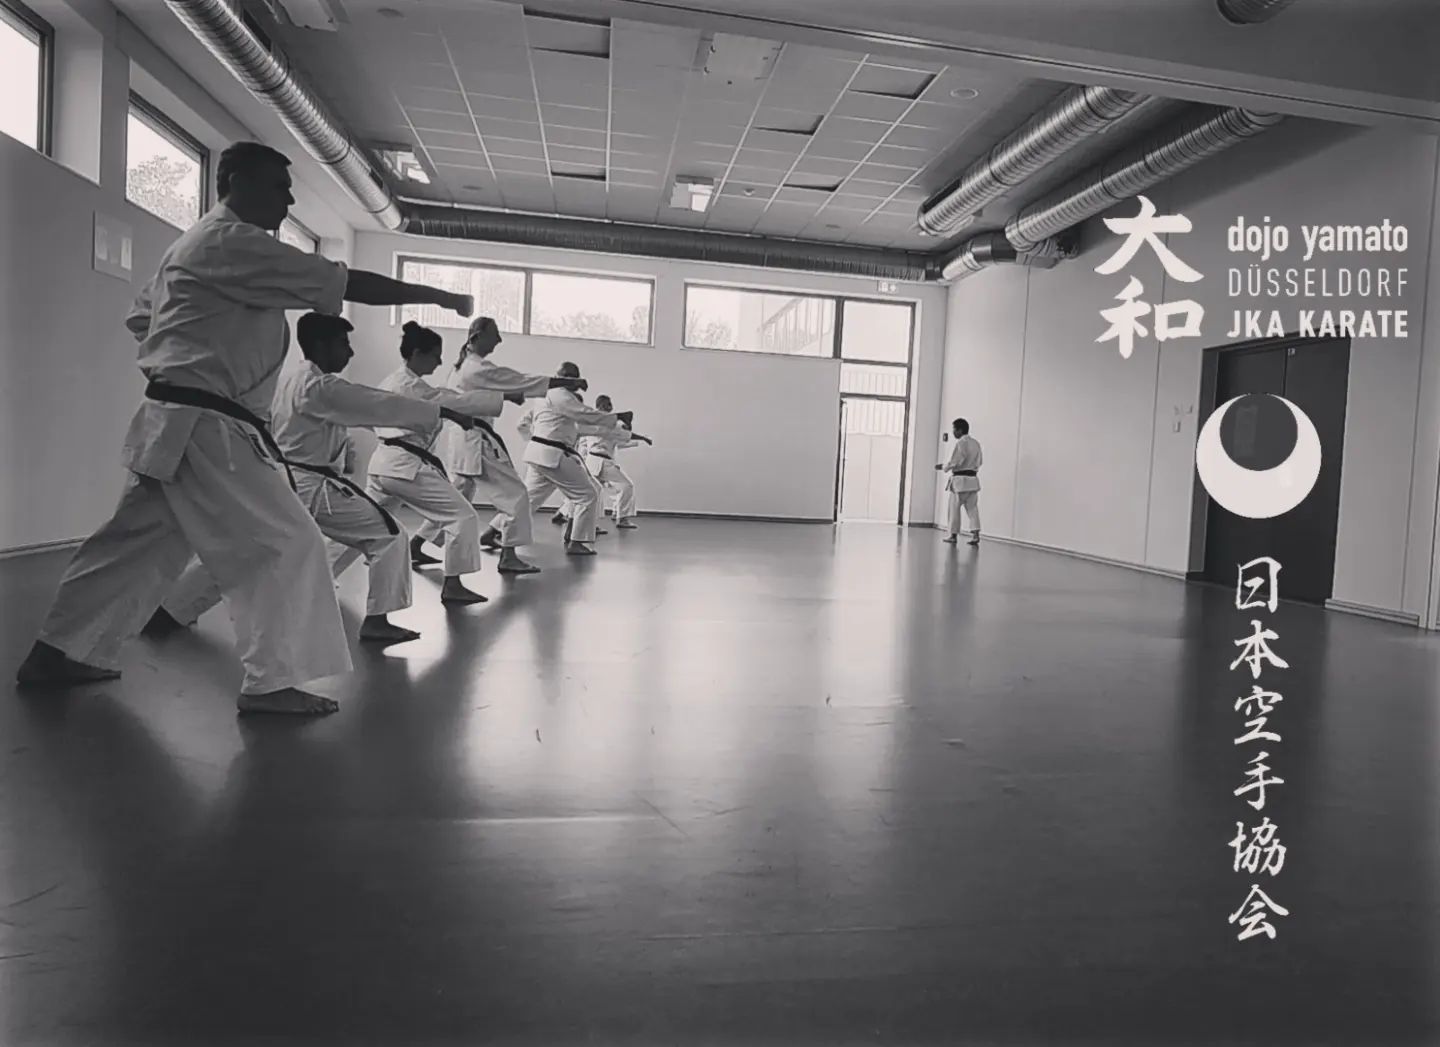 Training im Dojo Yamato Düsseldorf e.V.🥋
Trainer Keigo Shimizu 🇯🇵
.
.
.
.
.
#karate #training #fun #jka #djkb #kihon #kata #kumite #düsseldorf #duesseldorf #japan #sport #sportmotivation #shotokan #traditional #nrw #yamatoduesseldorf #fitness #fitnessmotivation #jkaKarate #jkakaratedo #neuss #ratingen #hilden #leverkusen #kaarst #selbstbstbewusstsein #selbstvertrauen